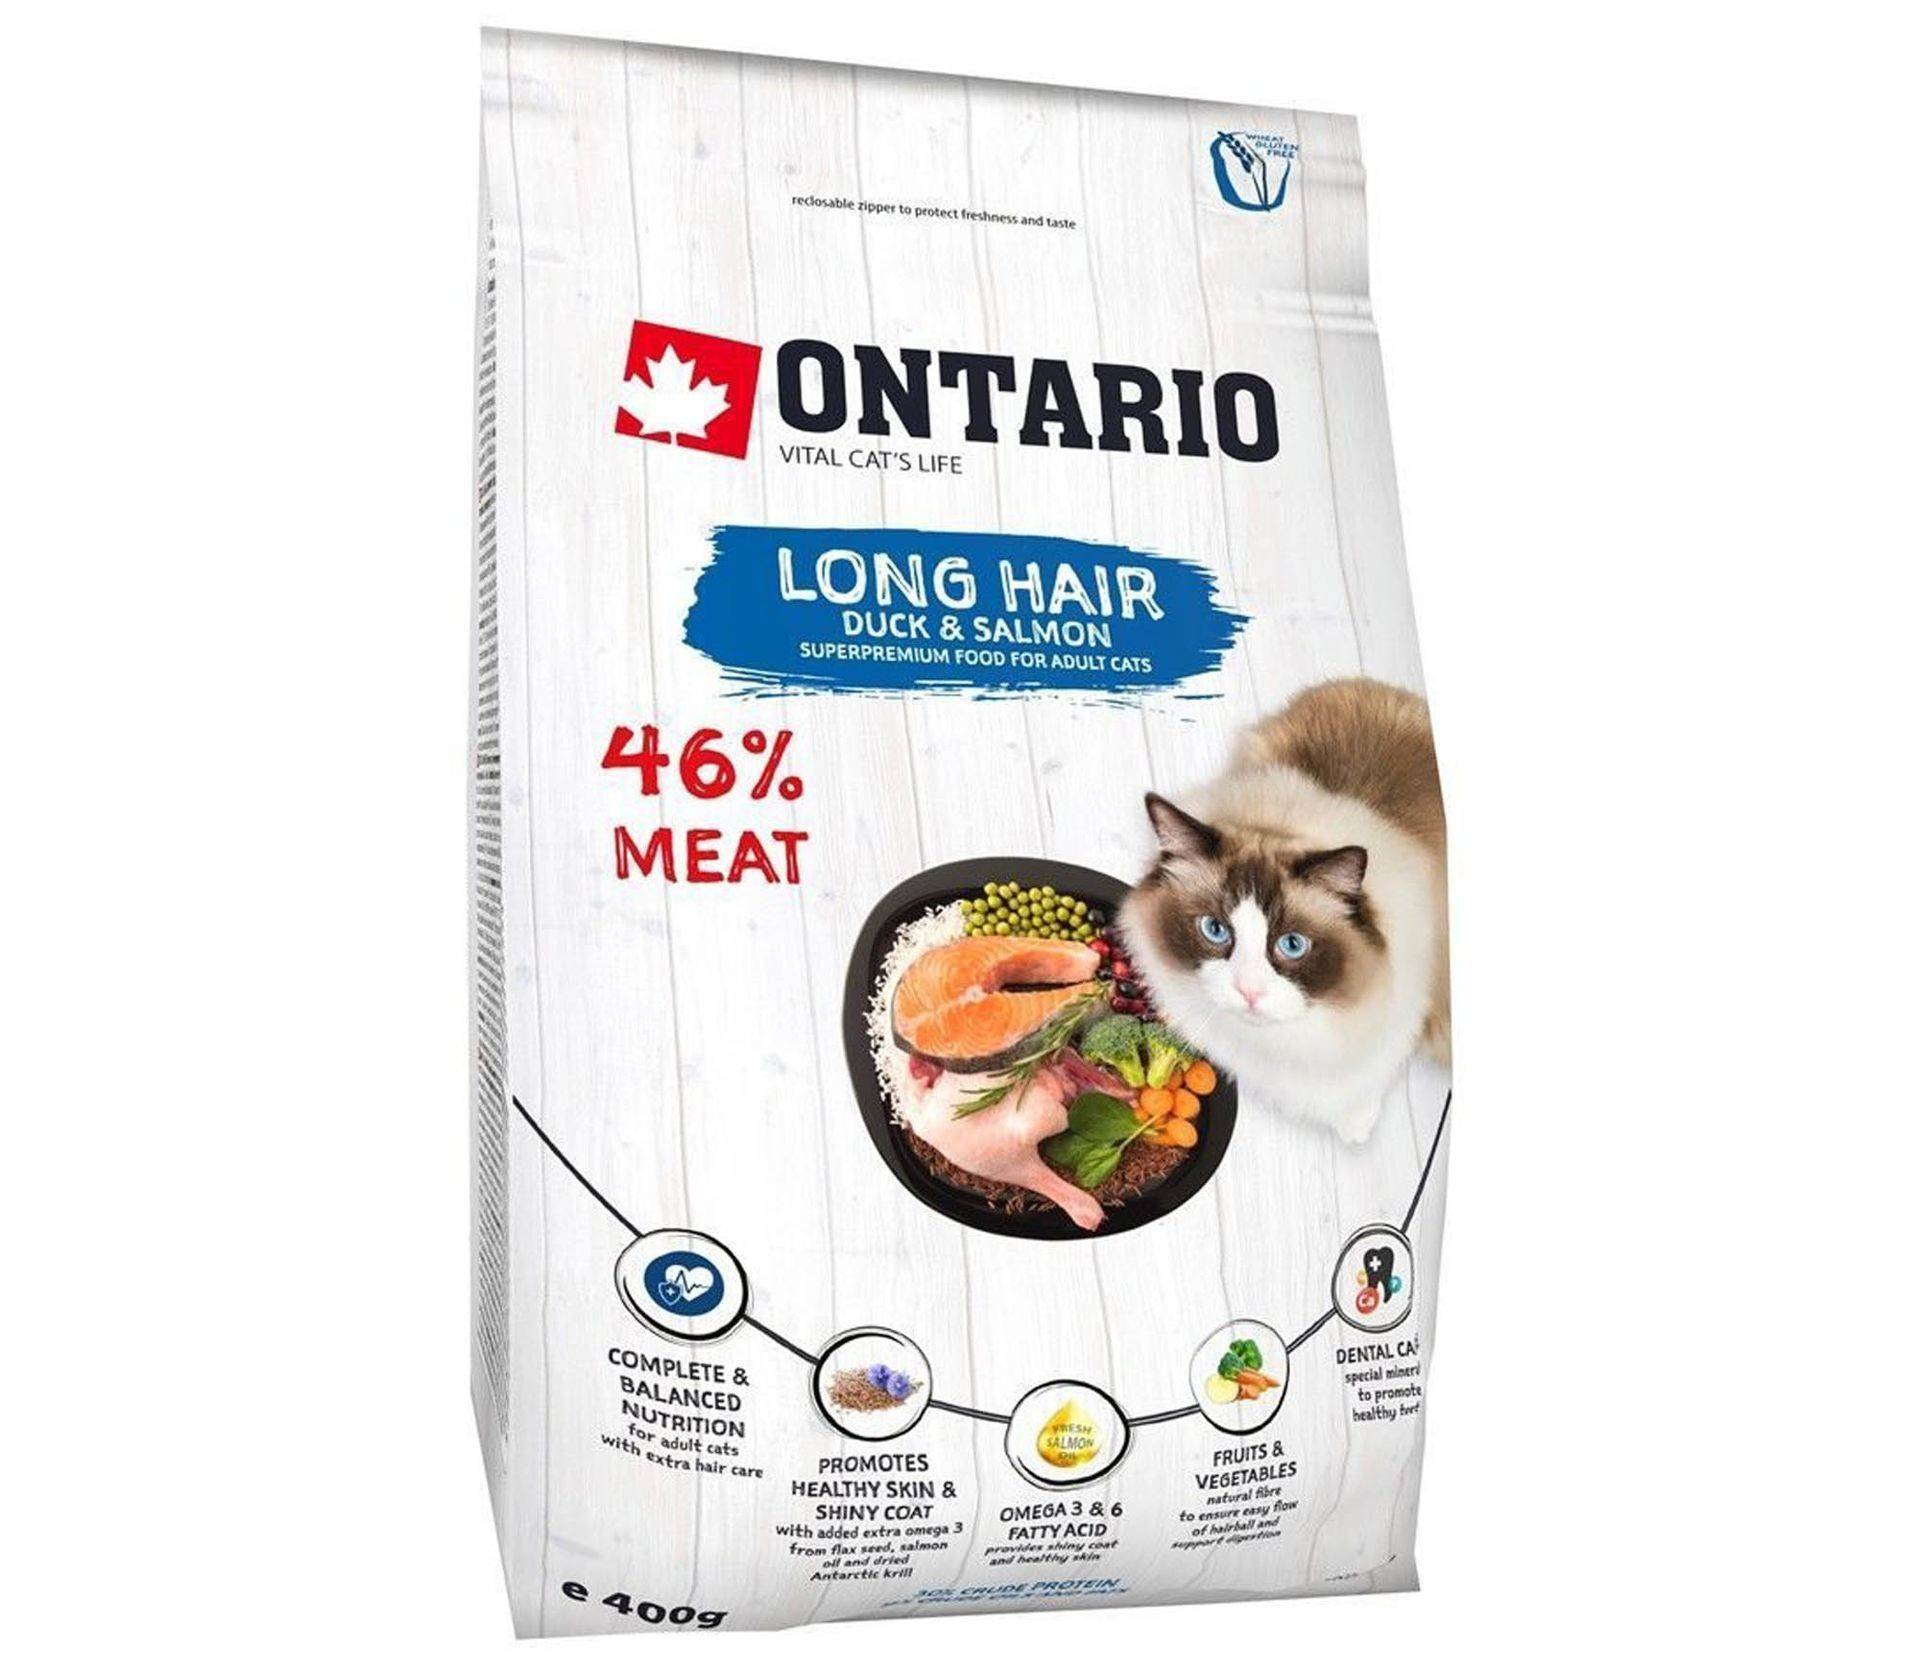 Онтарио - корм для кошек: состав, преимущества